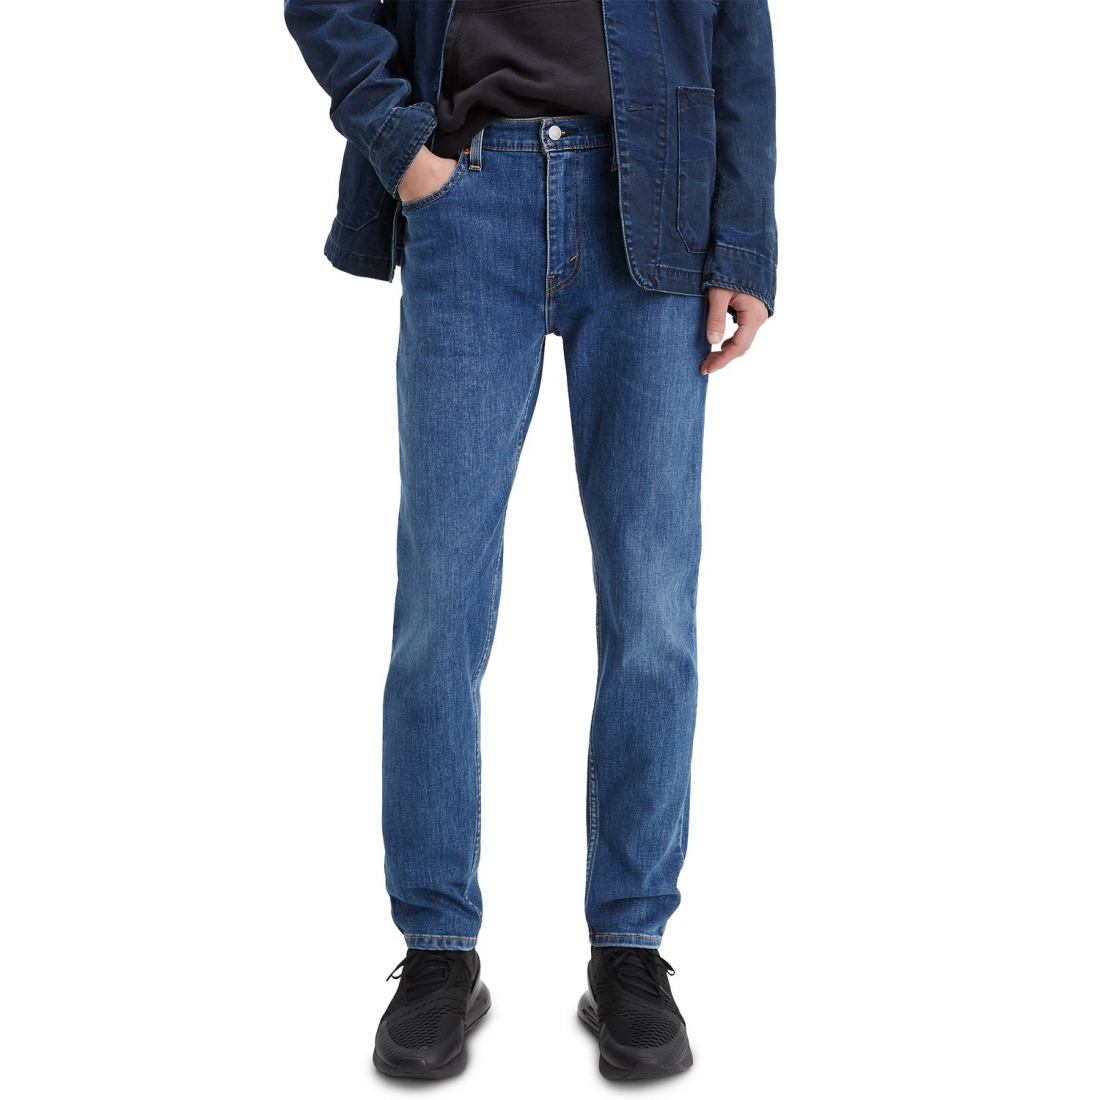 Men's '512™ Slim Taper All Seasons Tech' Jeans